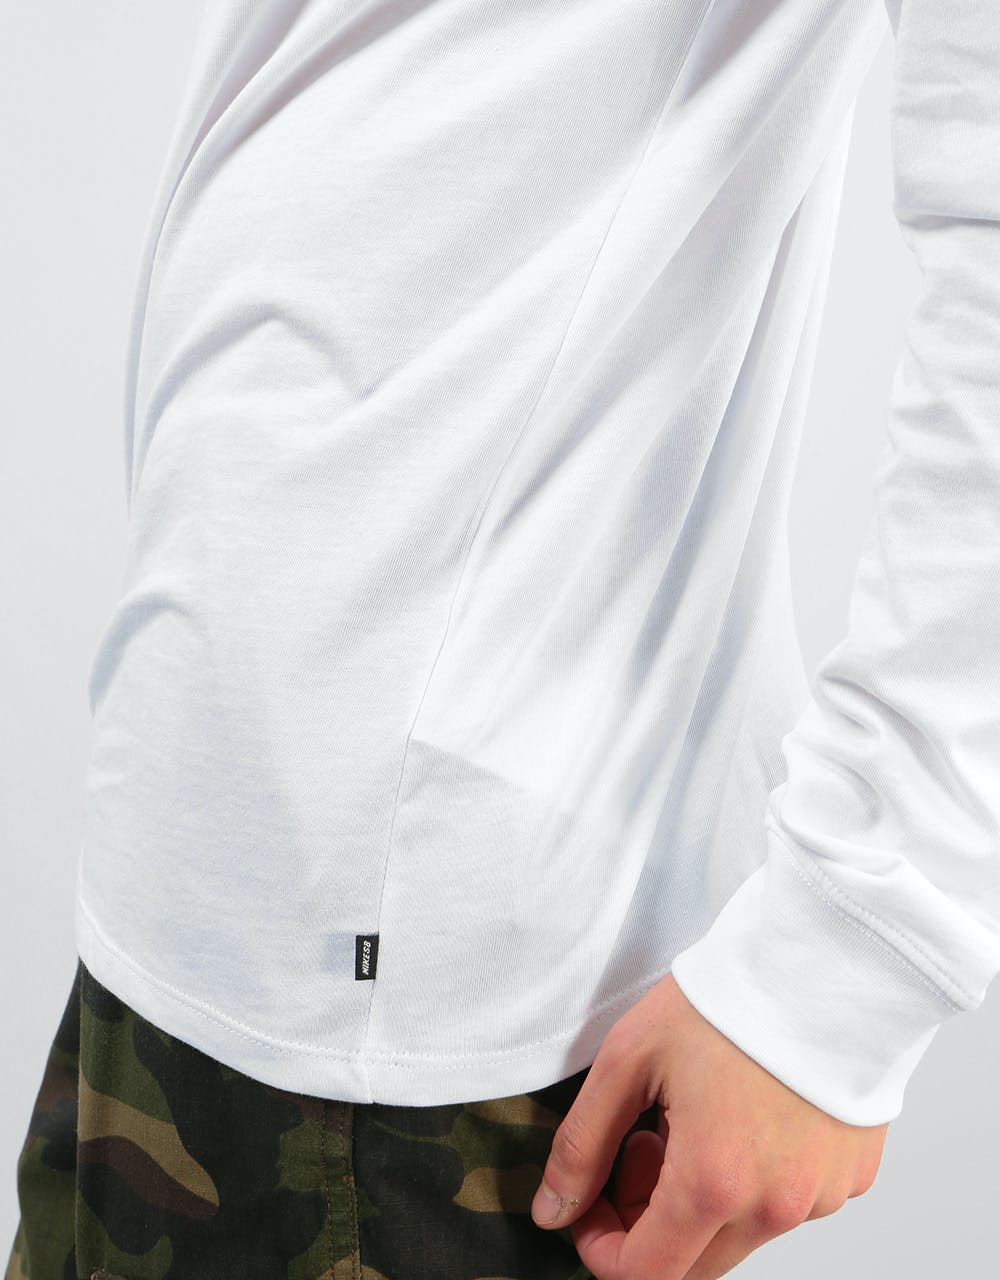 Nike SB Backwards L/S T-Shirt - White/Blue Force